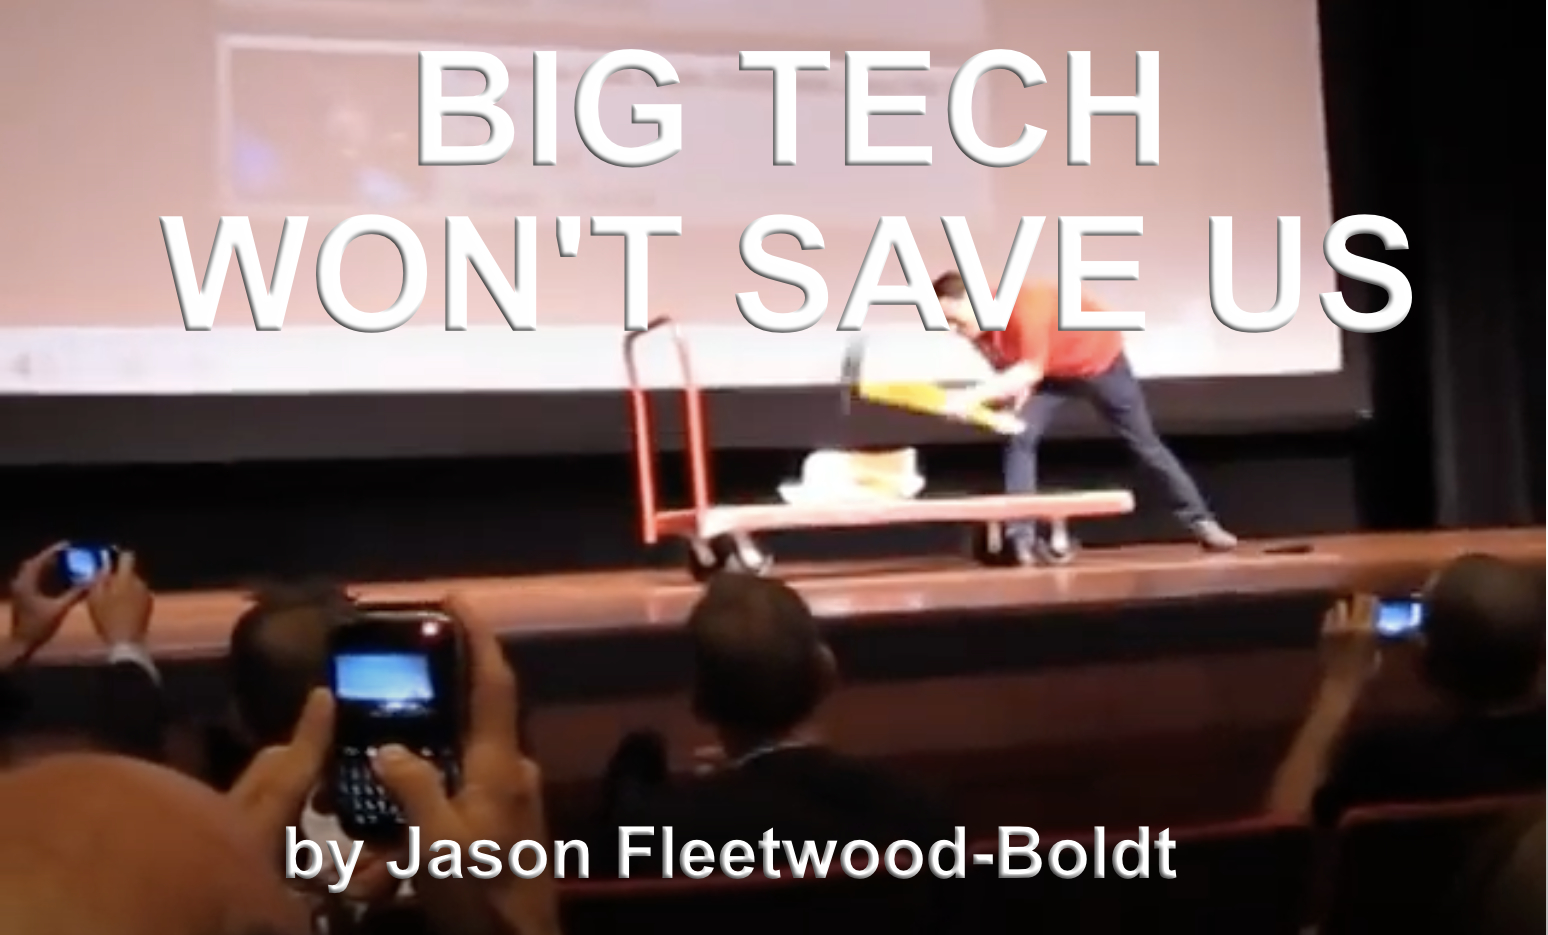 Big Tech Won't Save Us Jason Fleetwod-Boldt